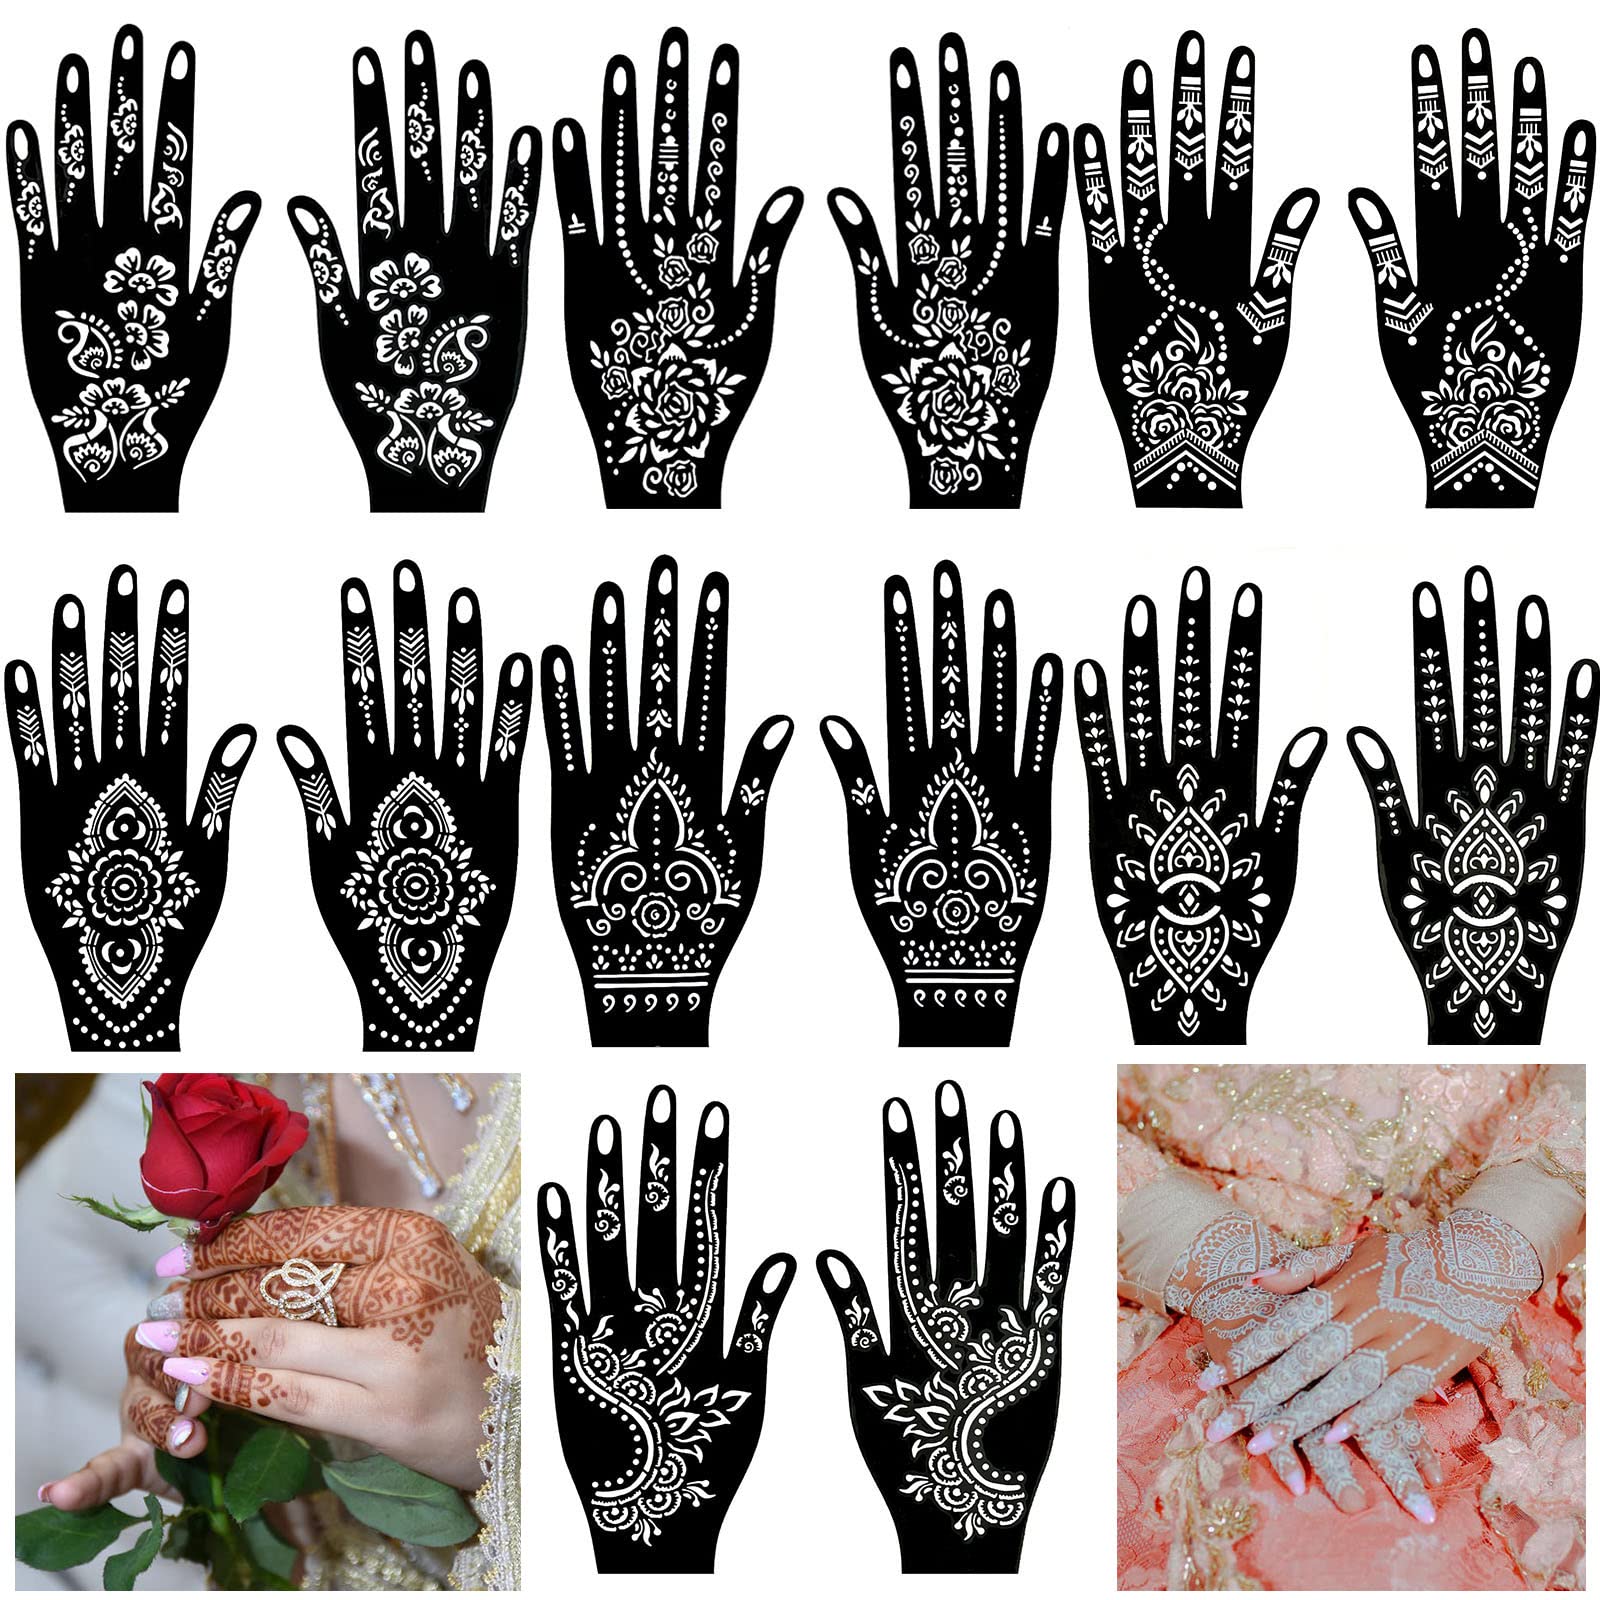 Amazon.com : Black Henna Tattoos Stickers Kits, 6 Sheets Lace Indian Henna  Temporary Tattoos Mandala Flower Elephant Chain Waterproof Henna Stickers  for Women Wedding Party DIY on Body Arm Legs : Beauty